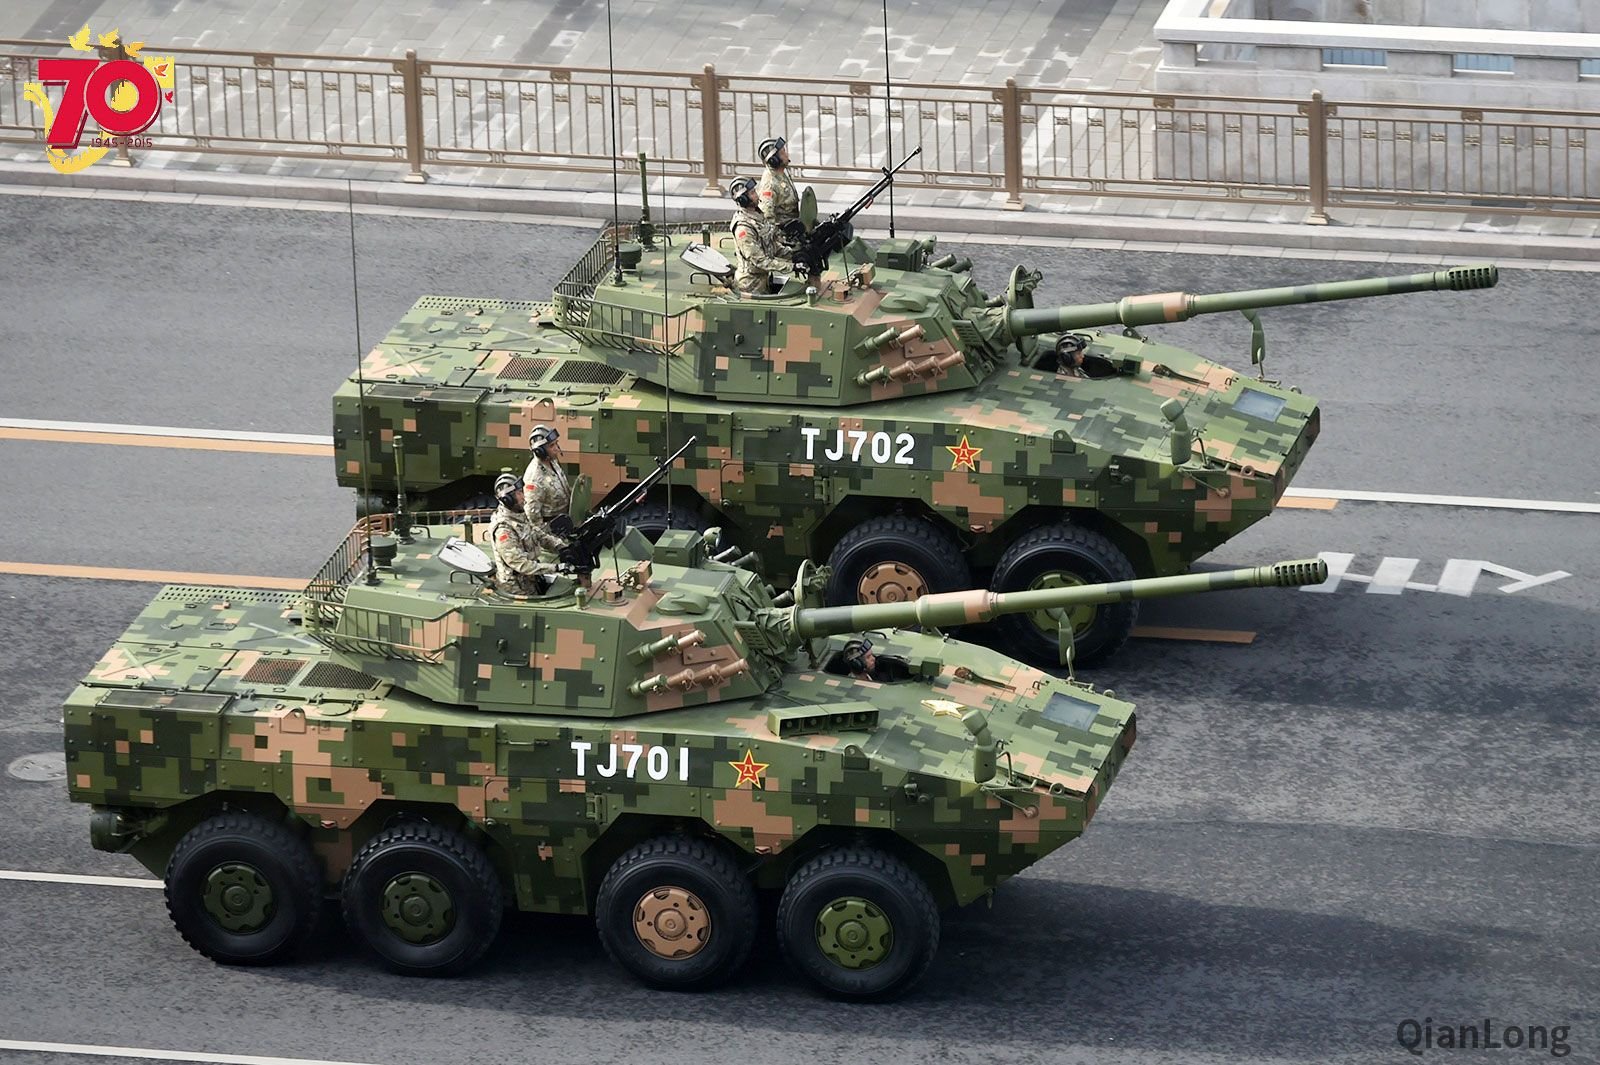 Танки тачки. Китайский БТР ZBL-09. Китайские БМП ZBL-09. "Колесный танк" ztl-11. Китайский колесный танк ztl-11.